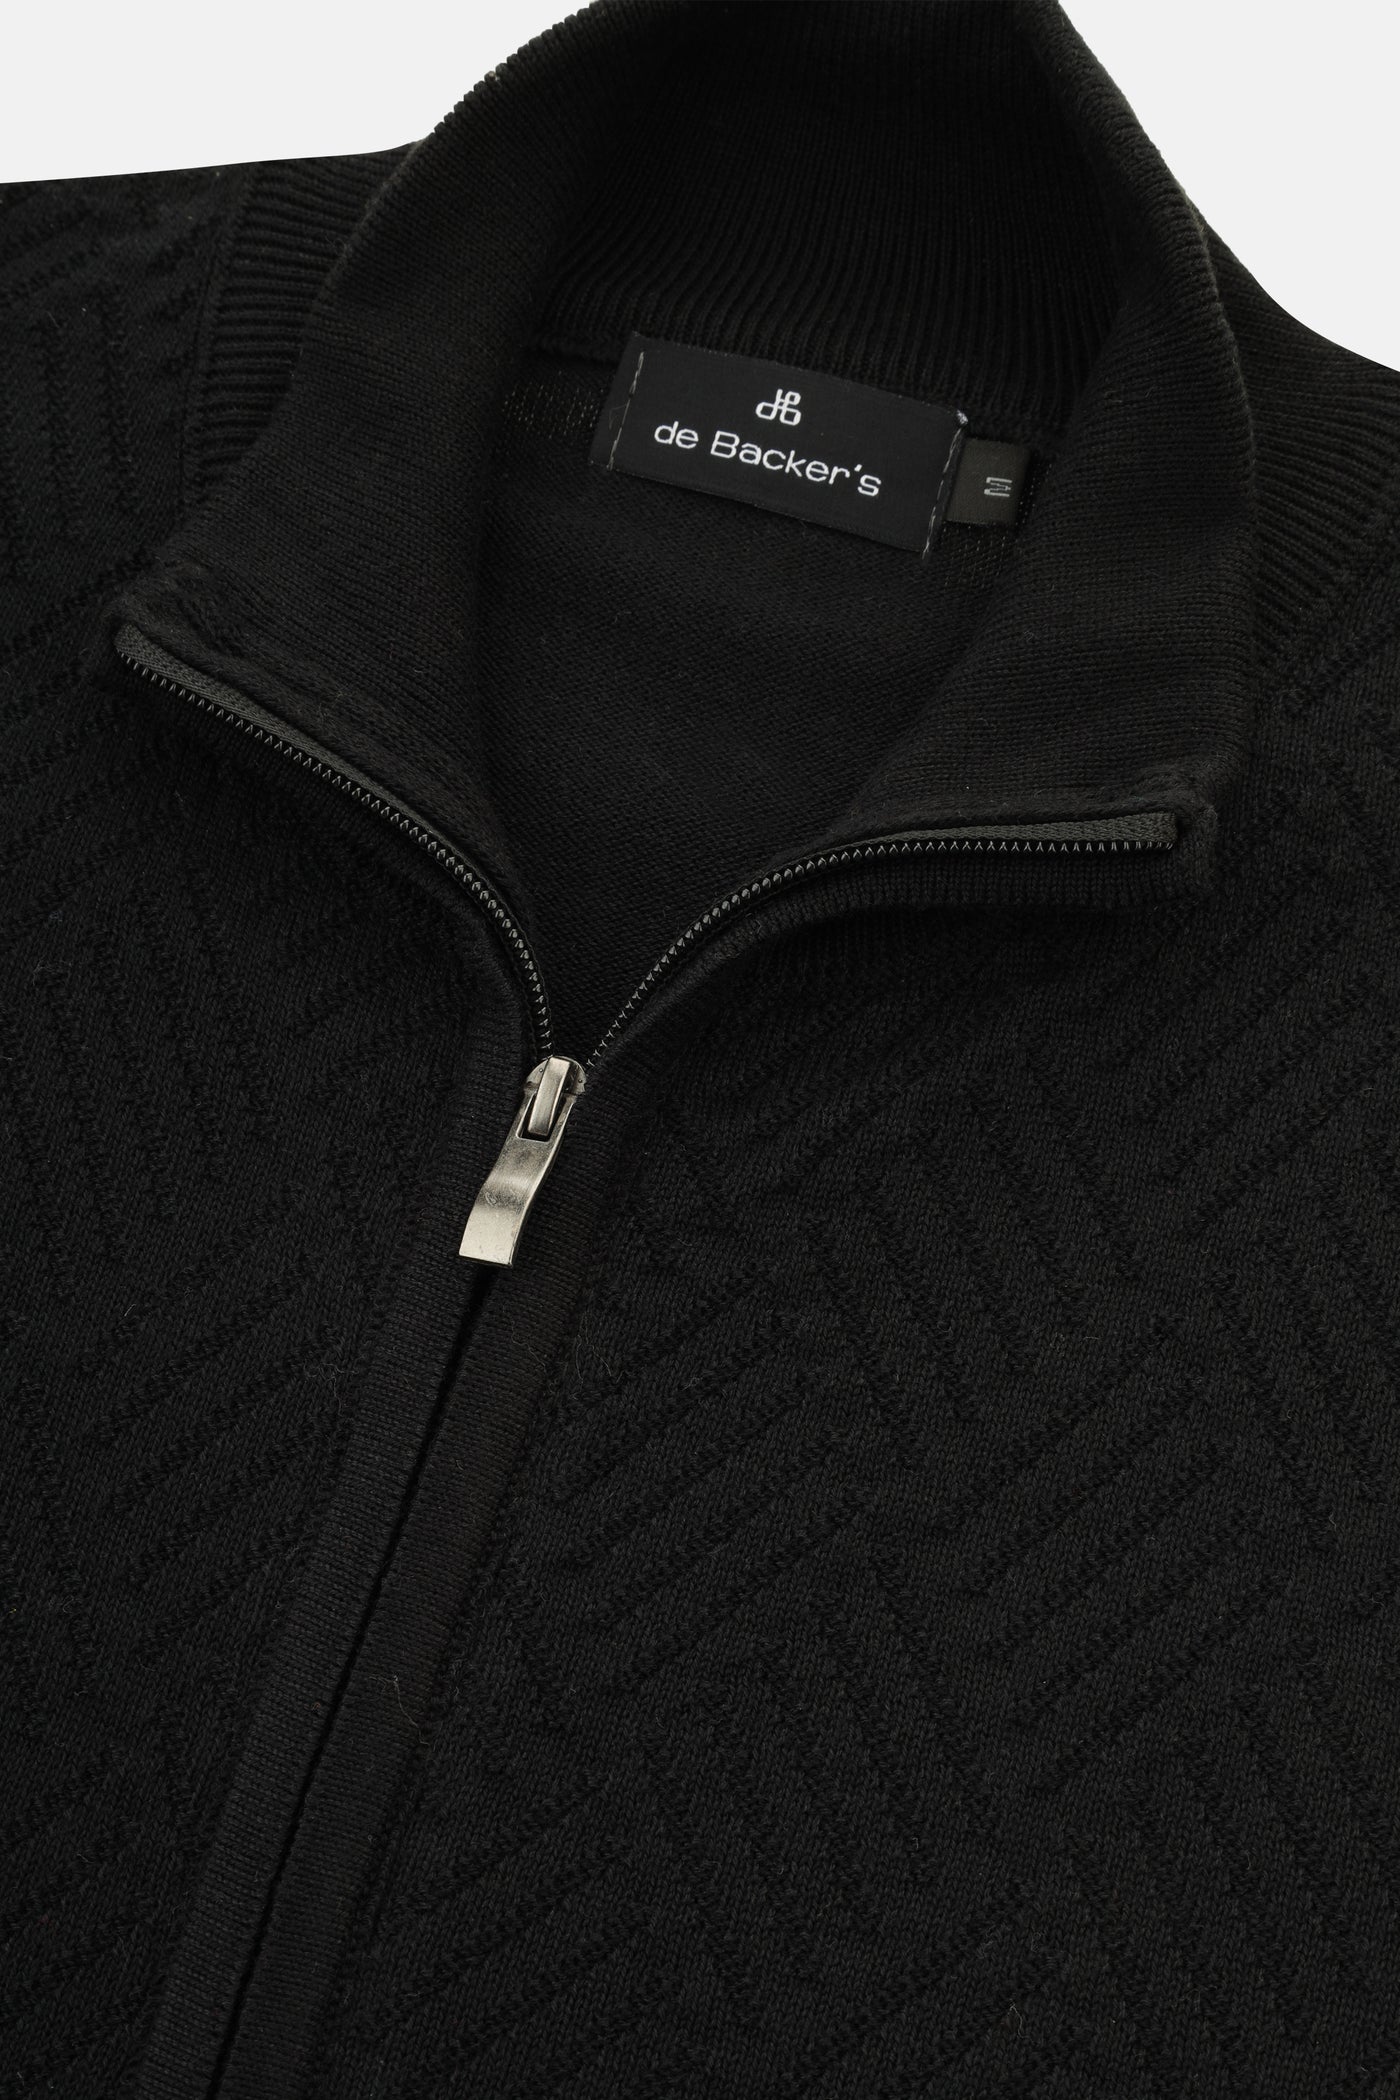 Jacquard Black Knitted Jacket